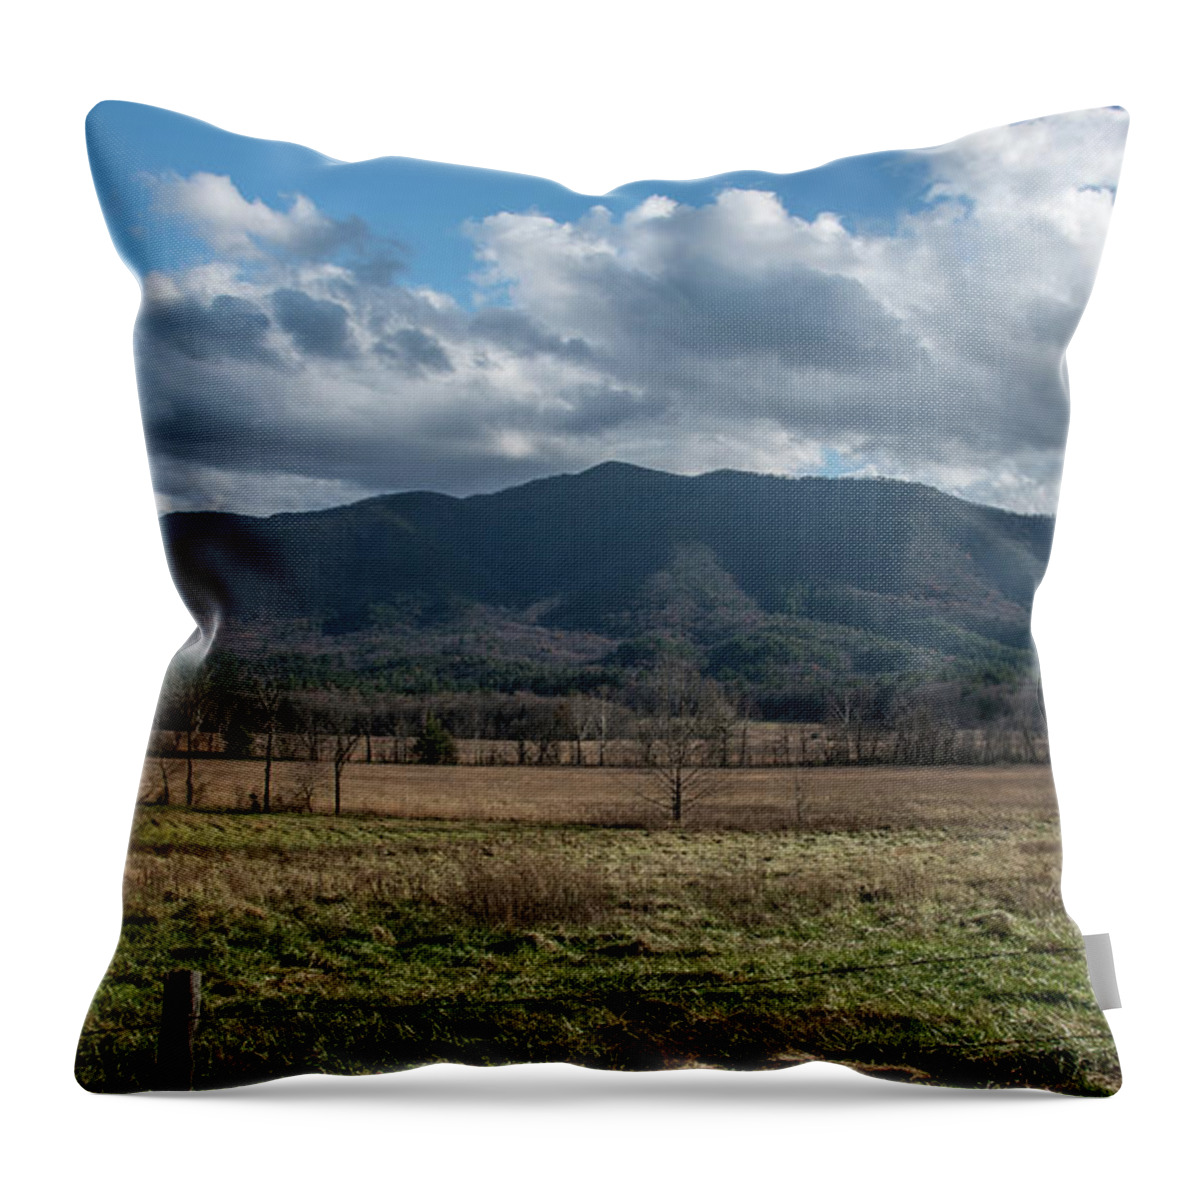 Landscape Throw Pillow featuring the photograph Smoky Mountains by Jaime Mercado